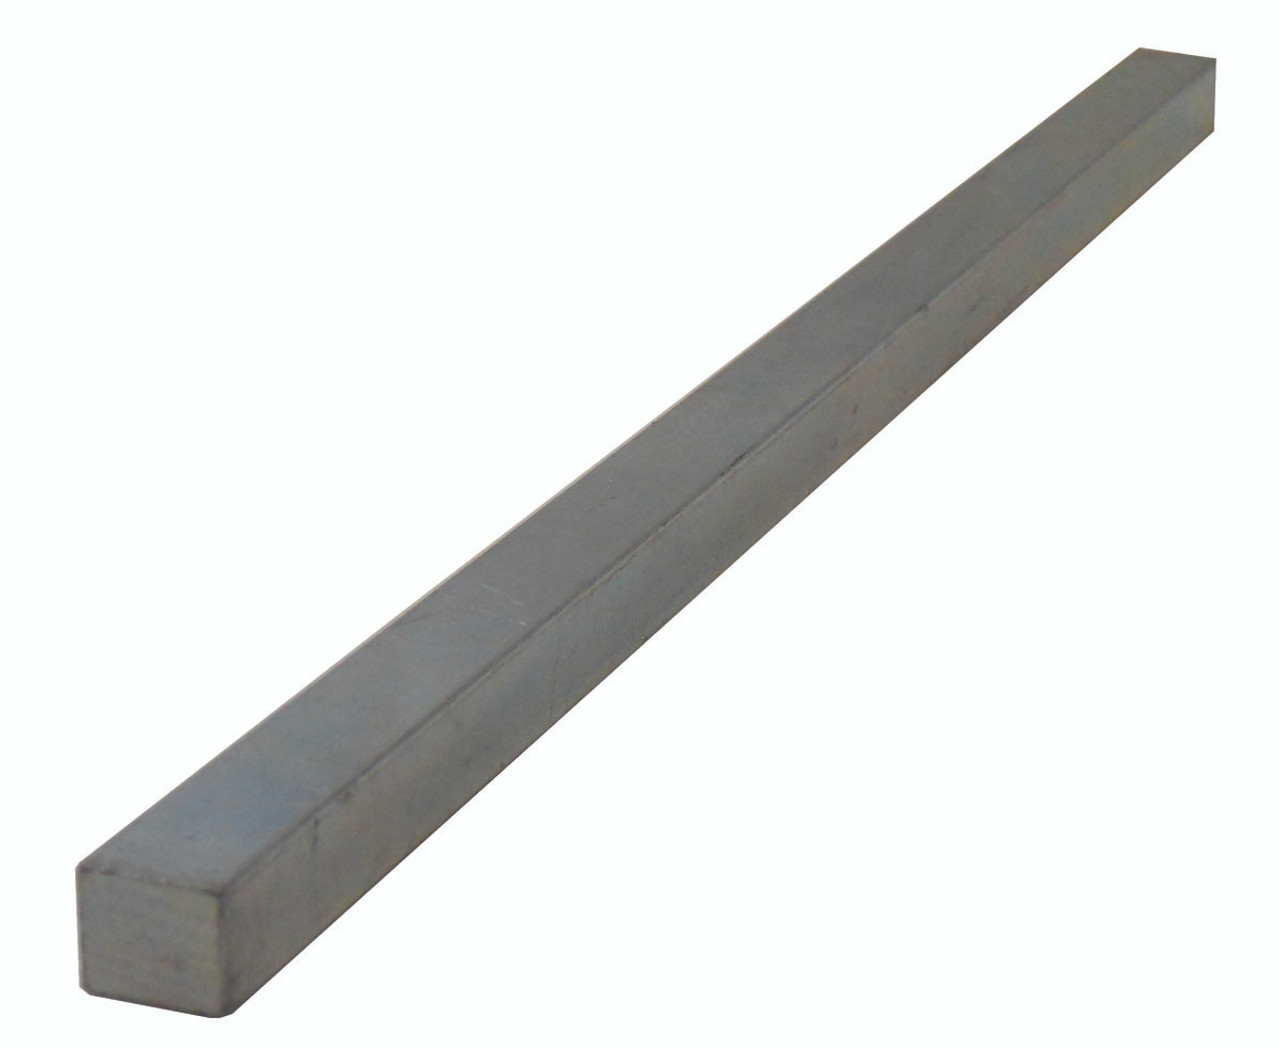 Rectangular SAE 3/4 x 1 x 12" Zinc Plated Steel Keystock  .750-1000-12